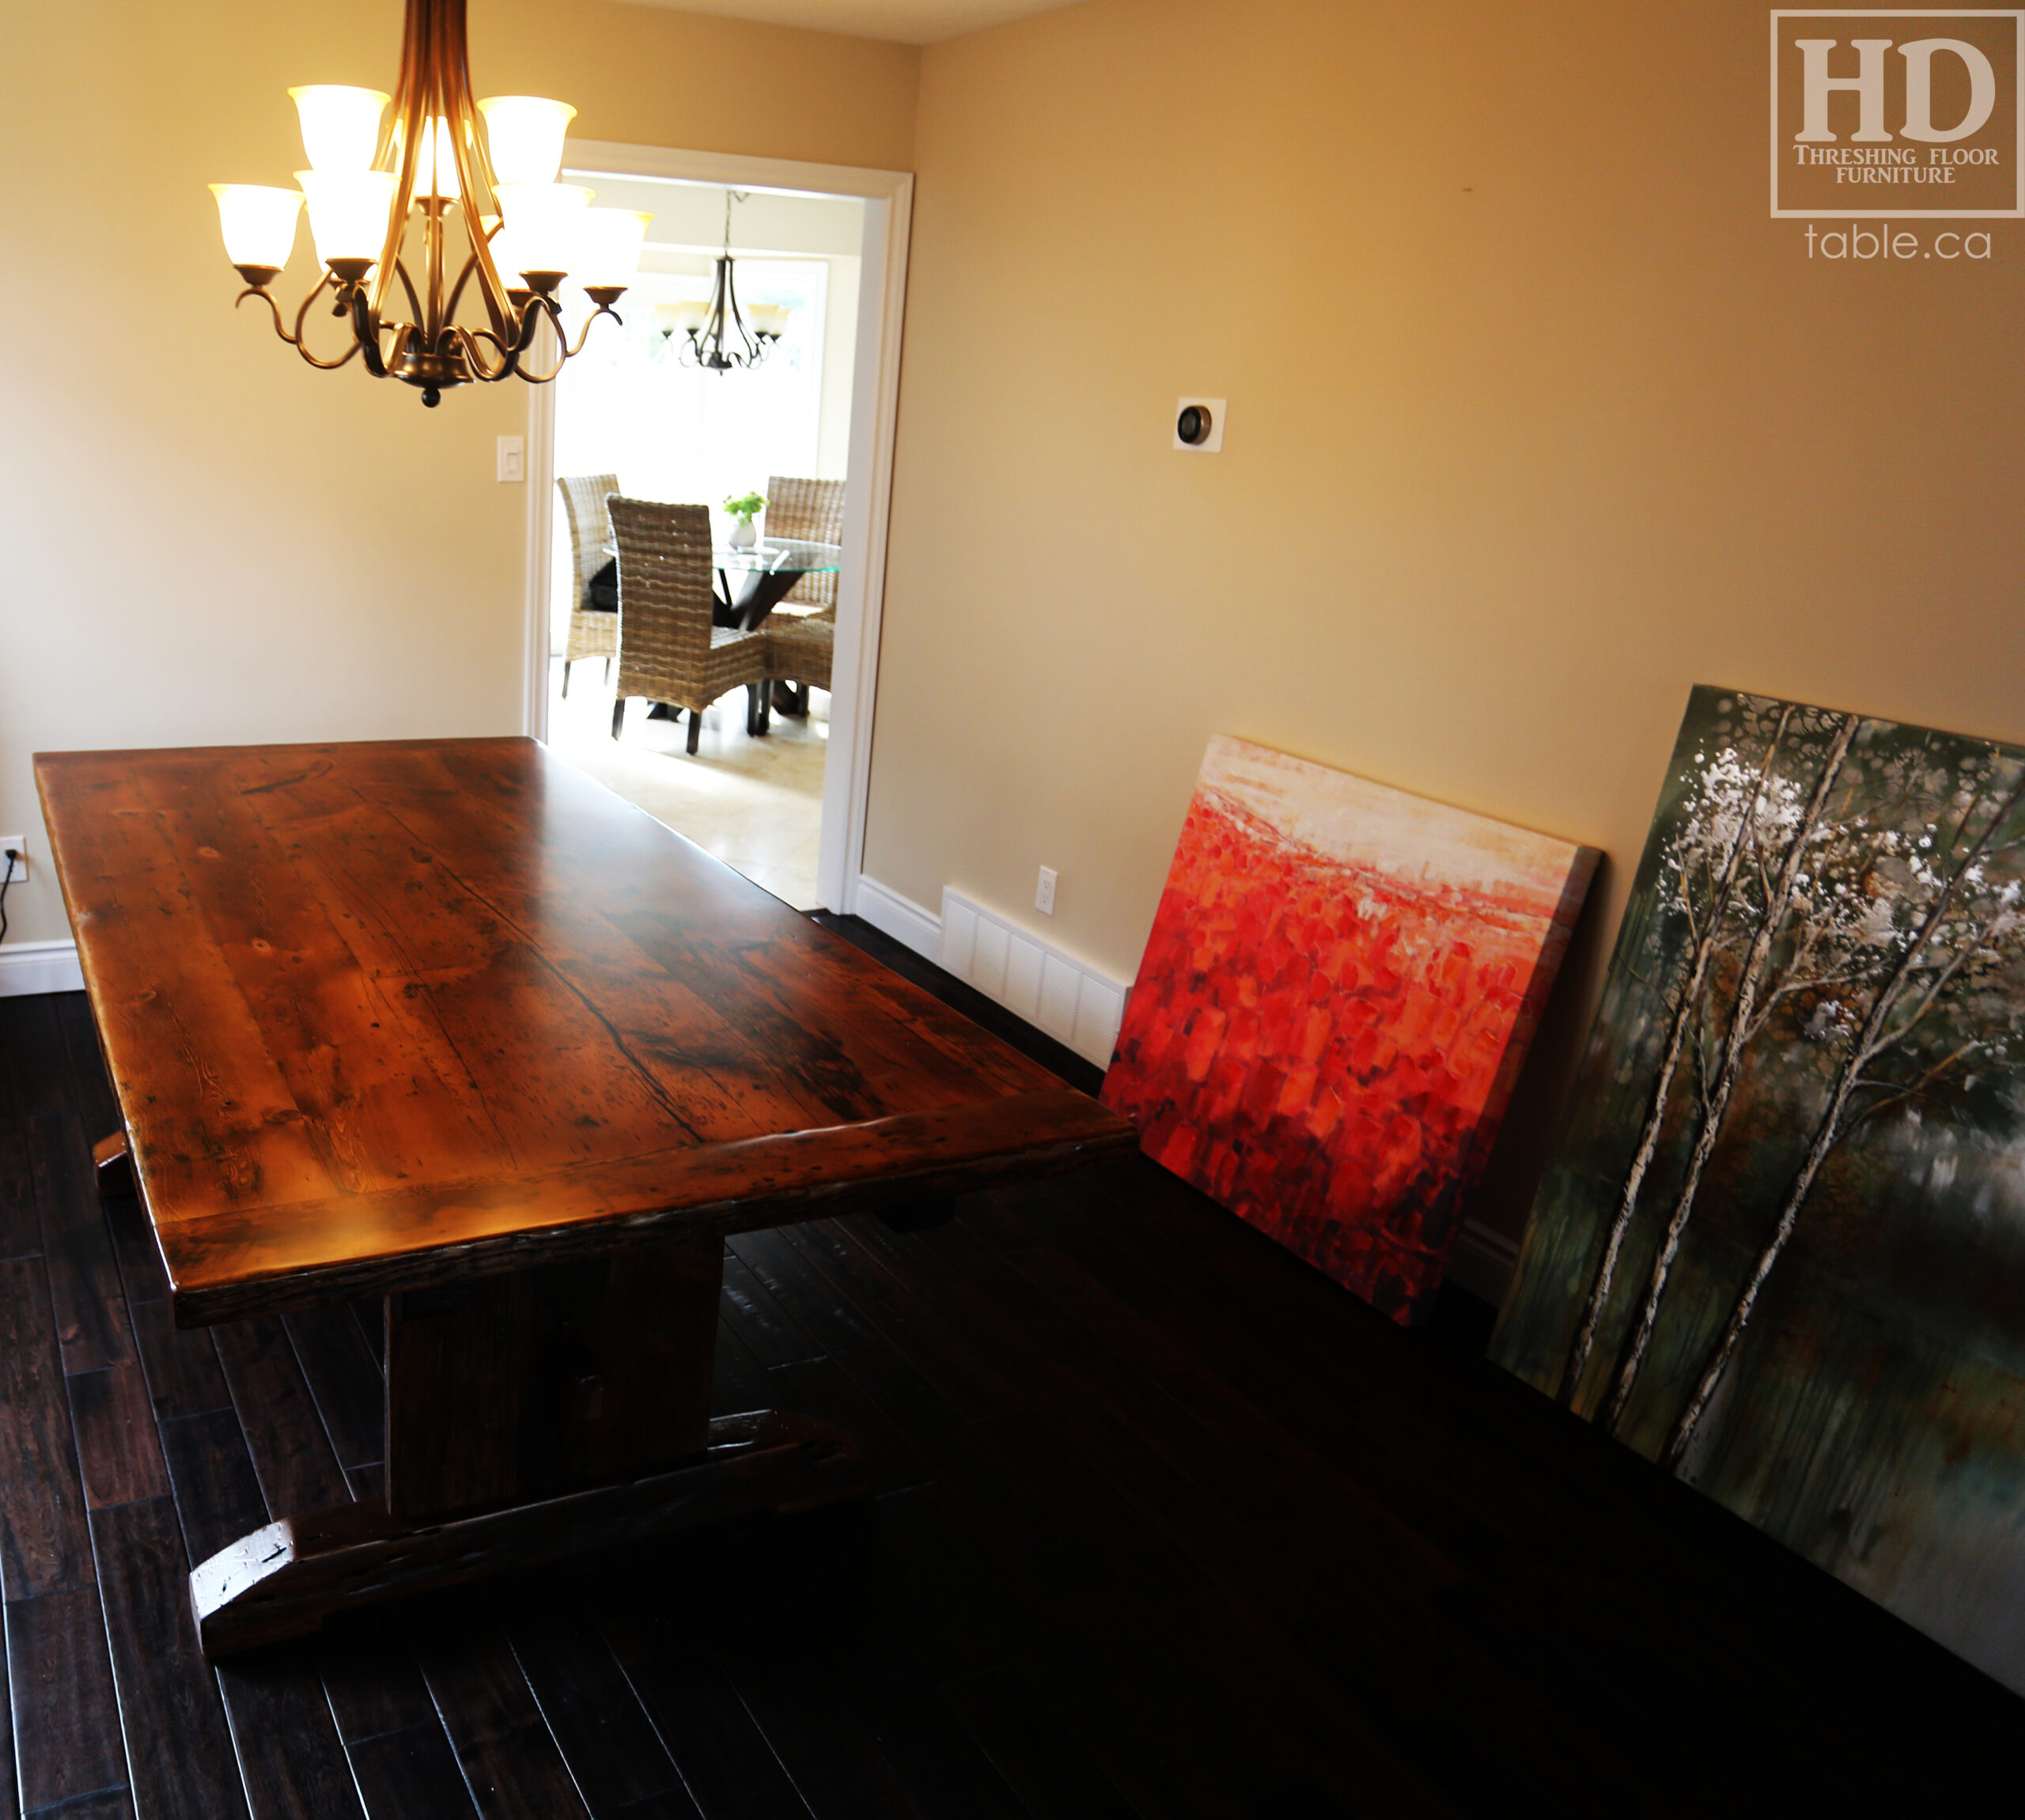 Trestle Table by HD Threshing Floor Furniture / www.table.ca